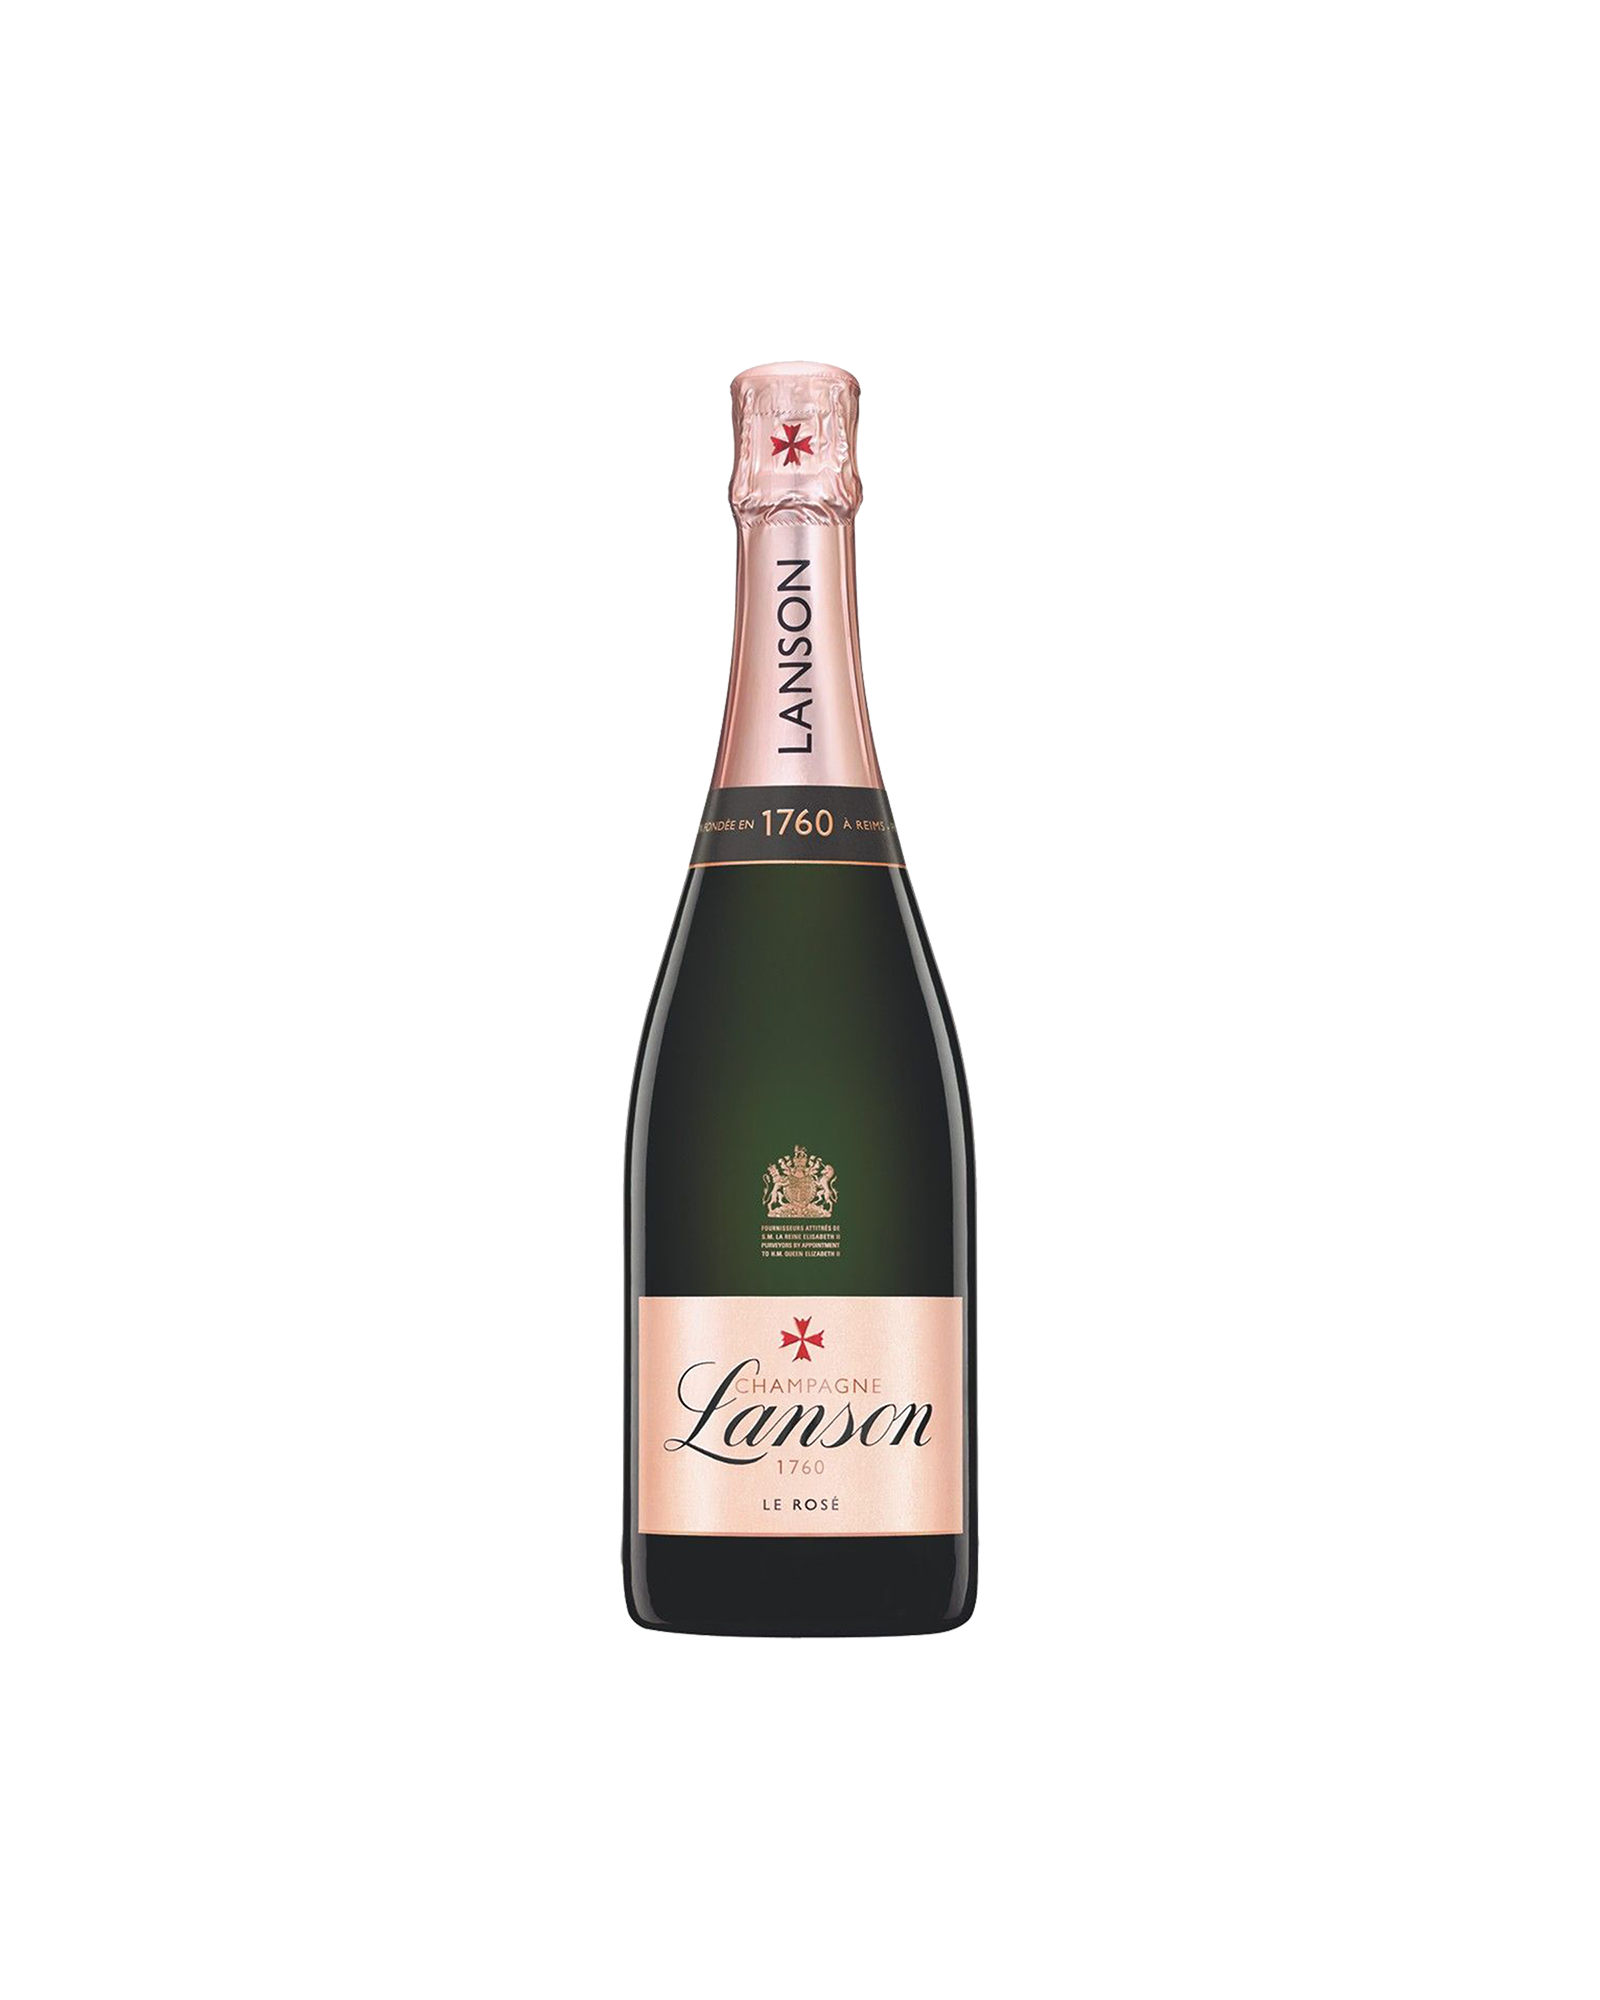 Buy Lanson Le Rose Champagne Nv Online or Near You in Australia